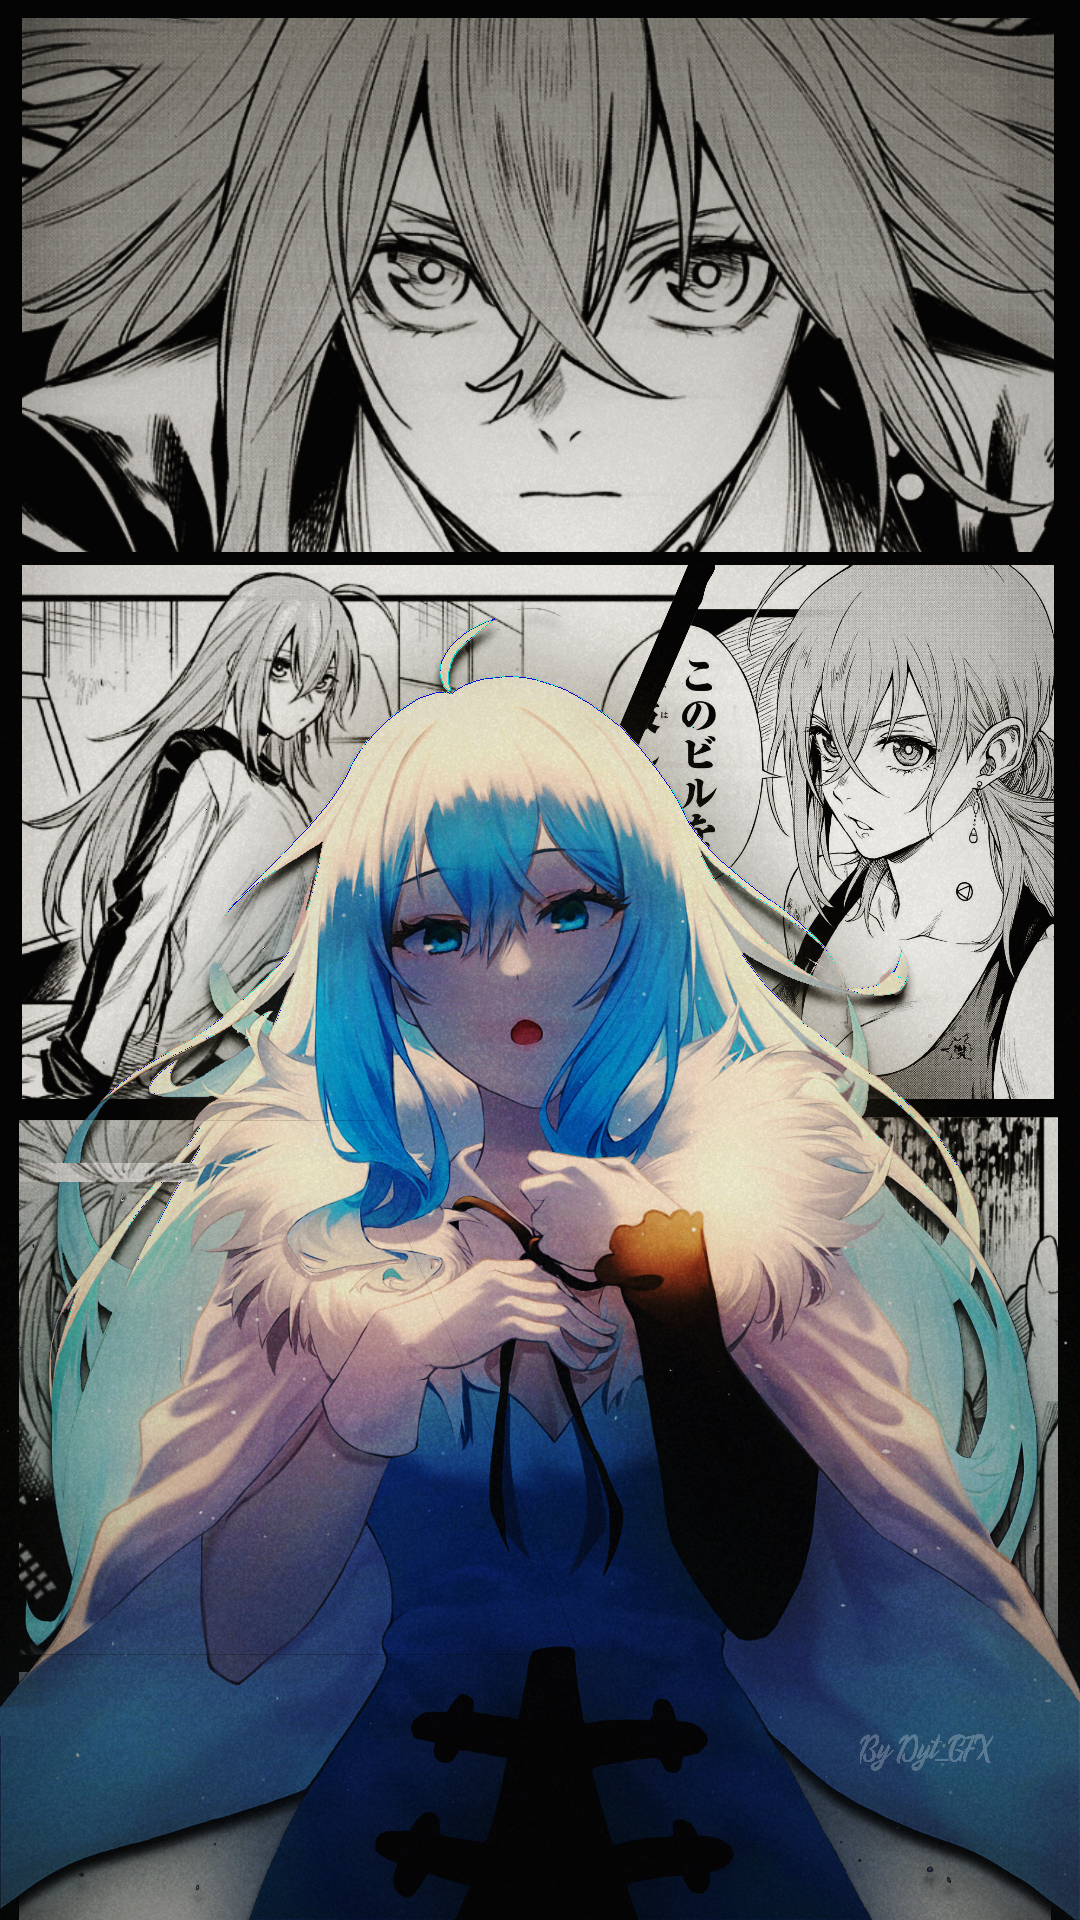 Anime 1080x1920 Vivy: Fluorite Eye’s Song Vivy manga collage gfxanime dytgfx phone fan art cellphone anime girls